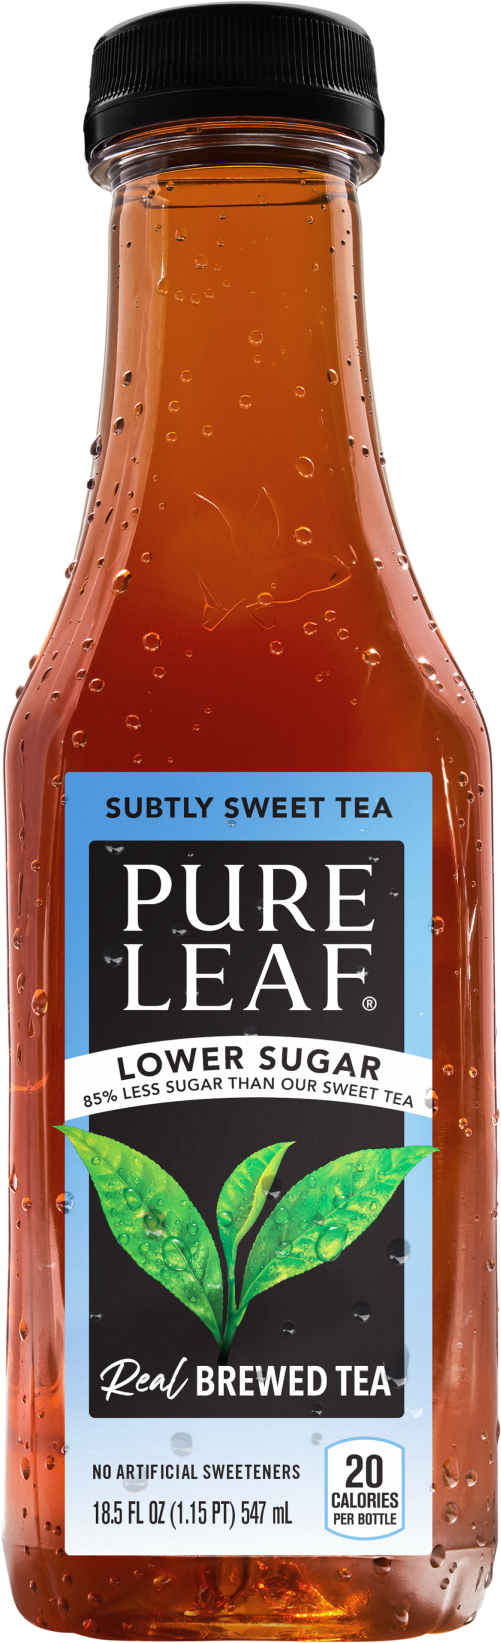 Pure Leaf (@pureleaf) Official